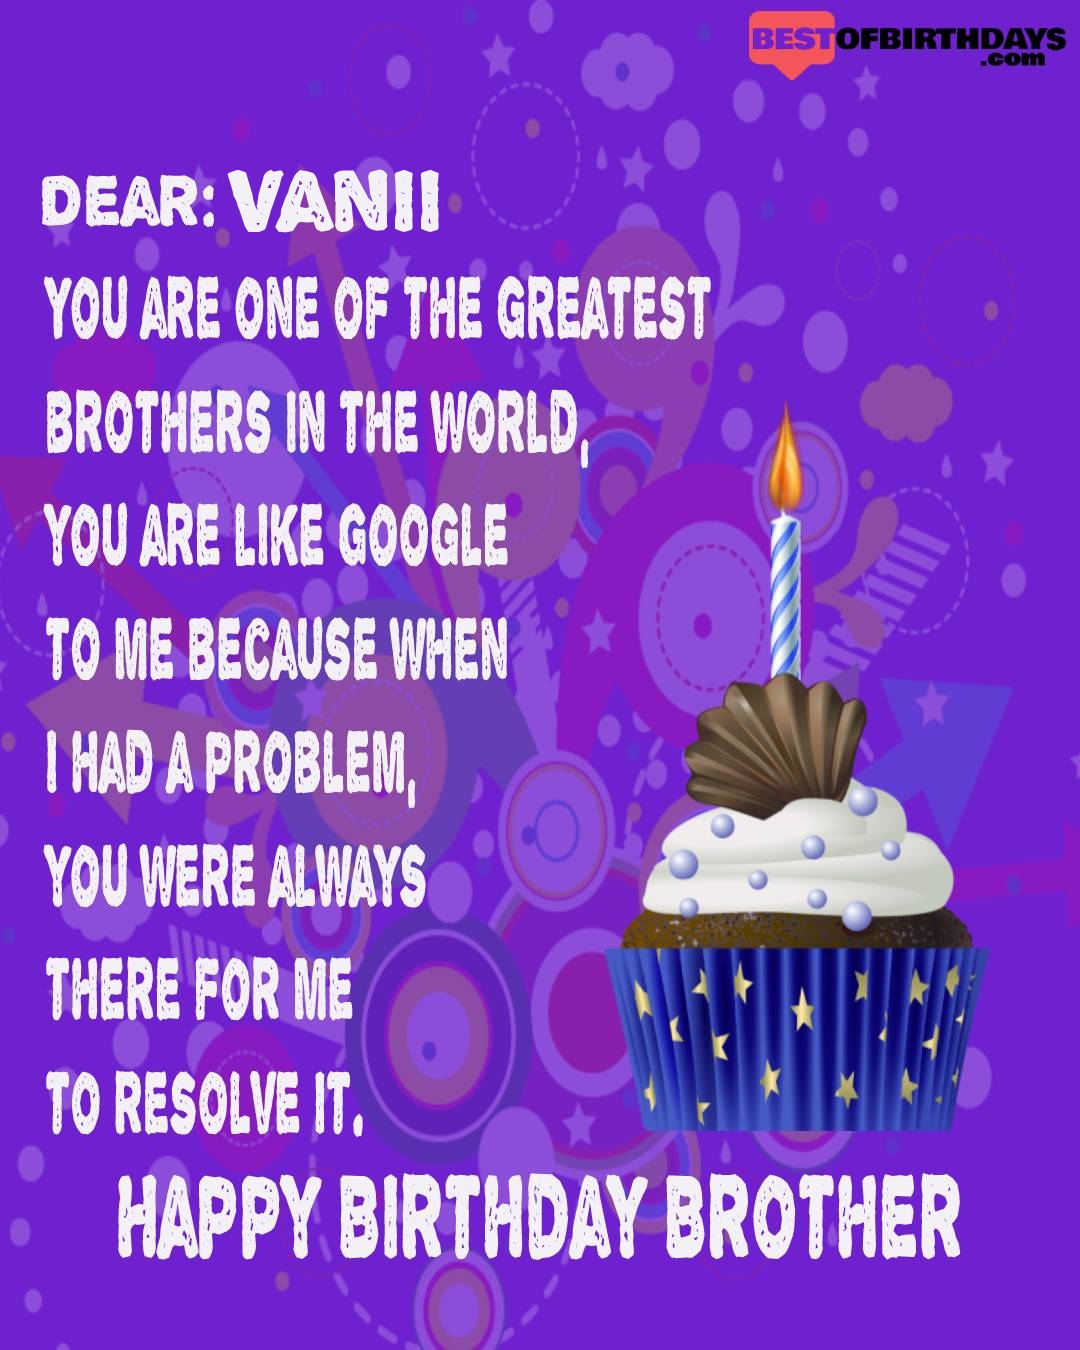 Happy birthday vanii bhai brother bro